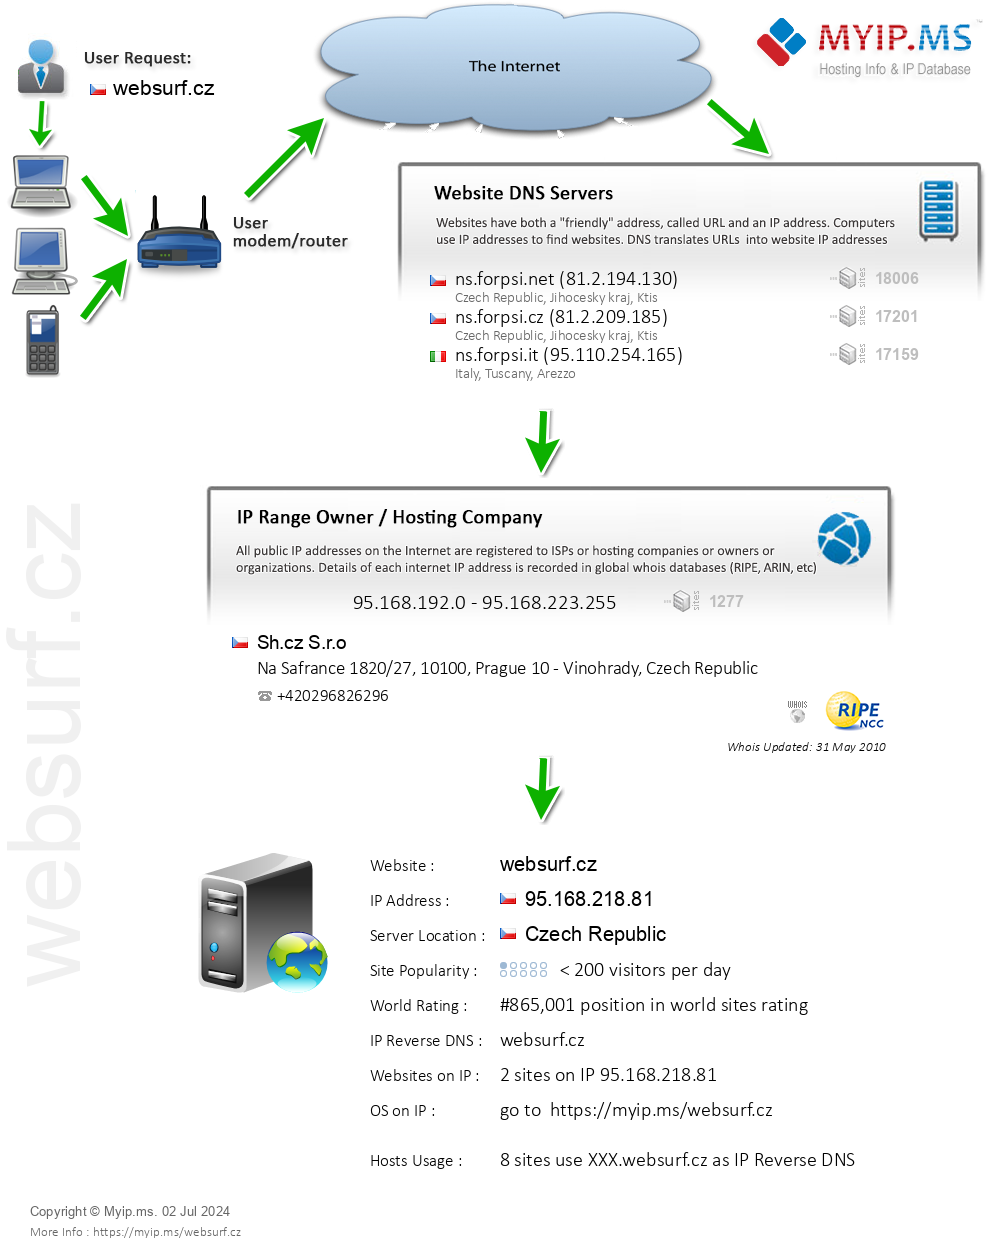 Websurf.cz - Website Hosting Visual IP Diagram